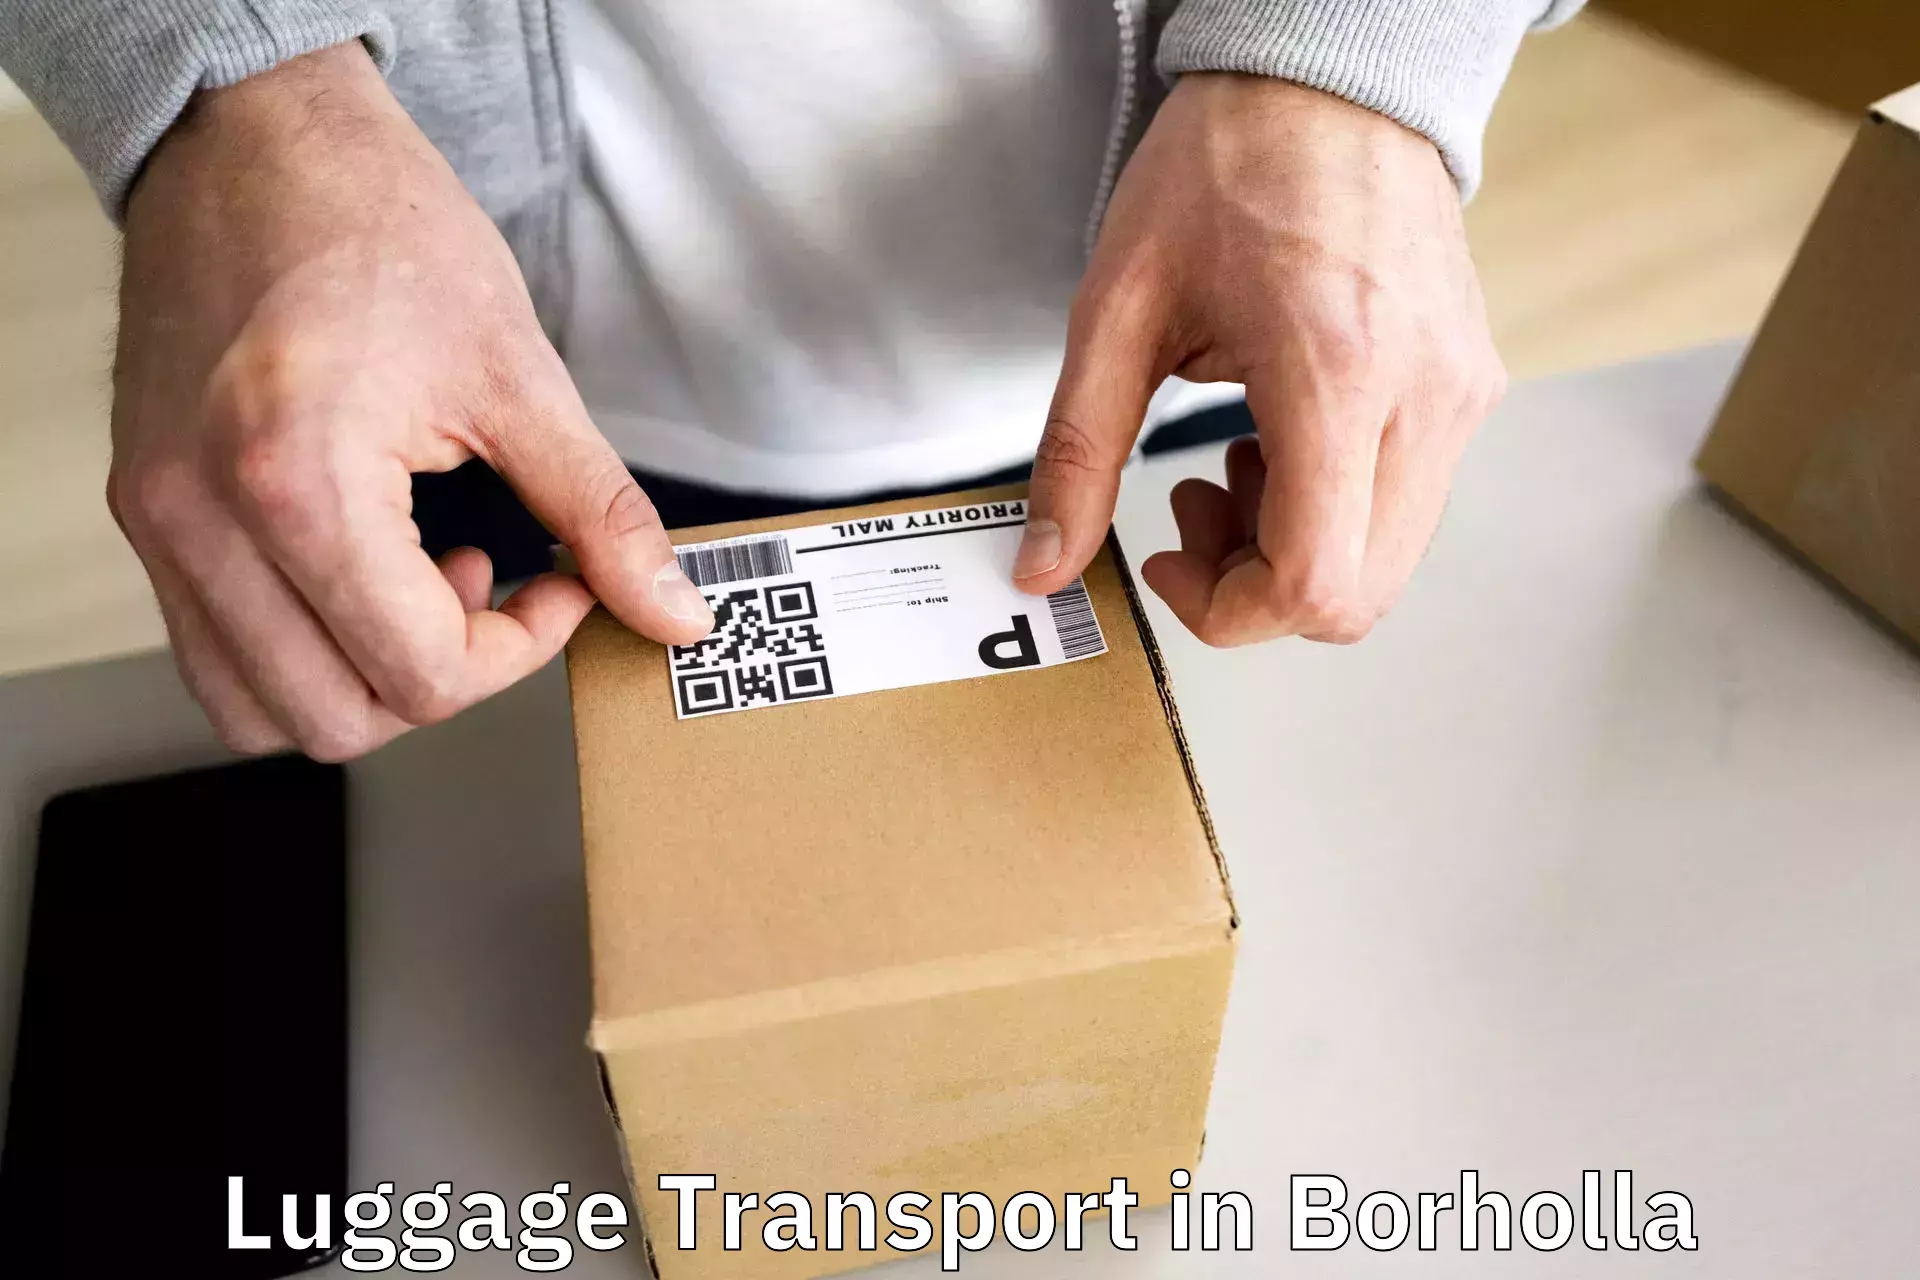 Professional baggage transport in Borholla